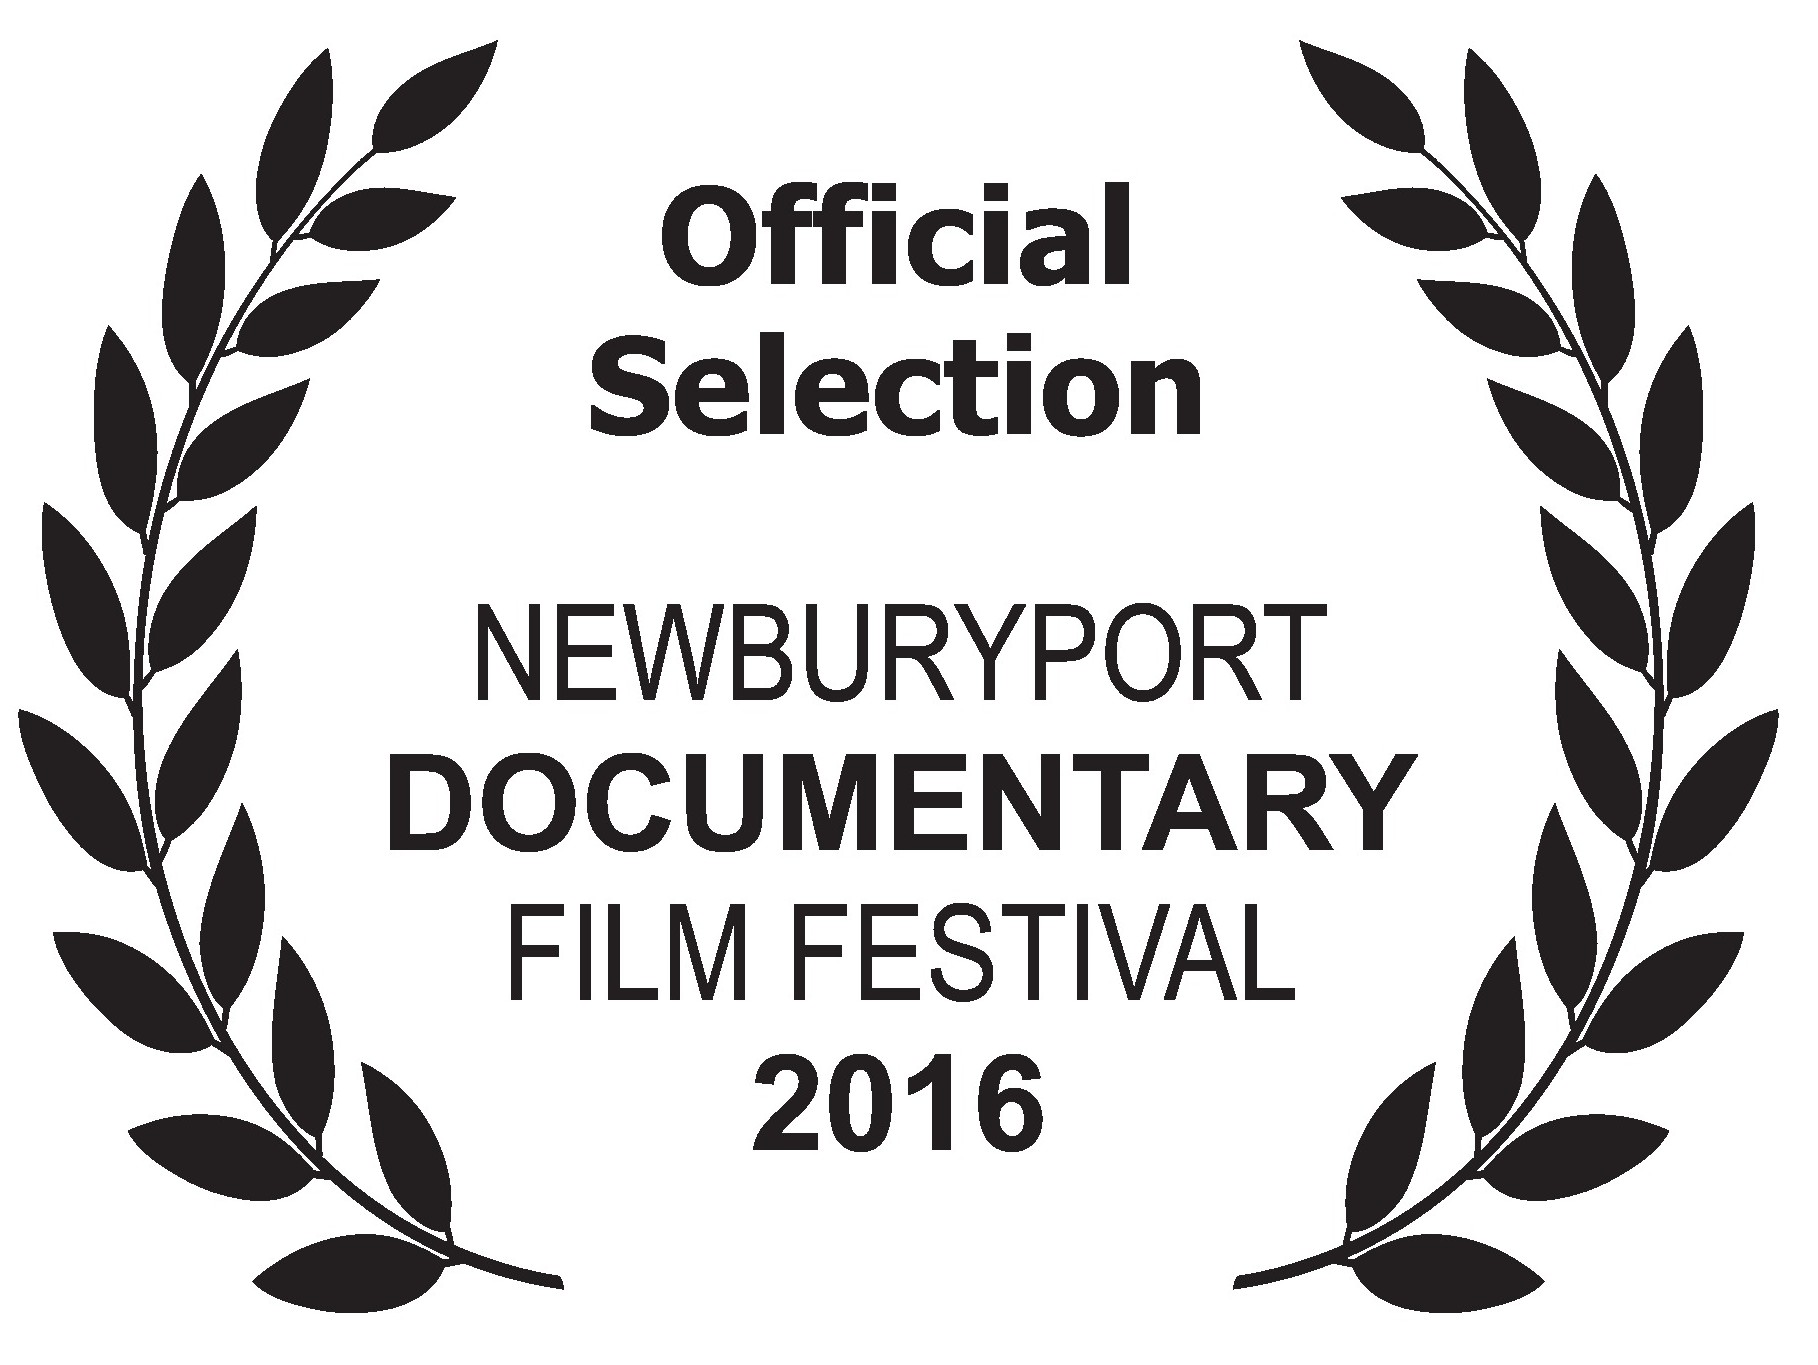 Newburyport Documentary Film Festival